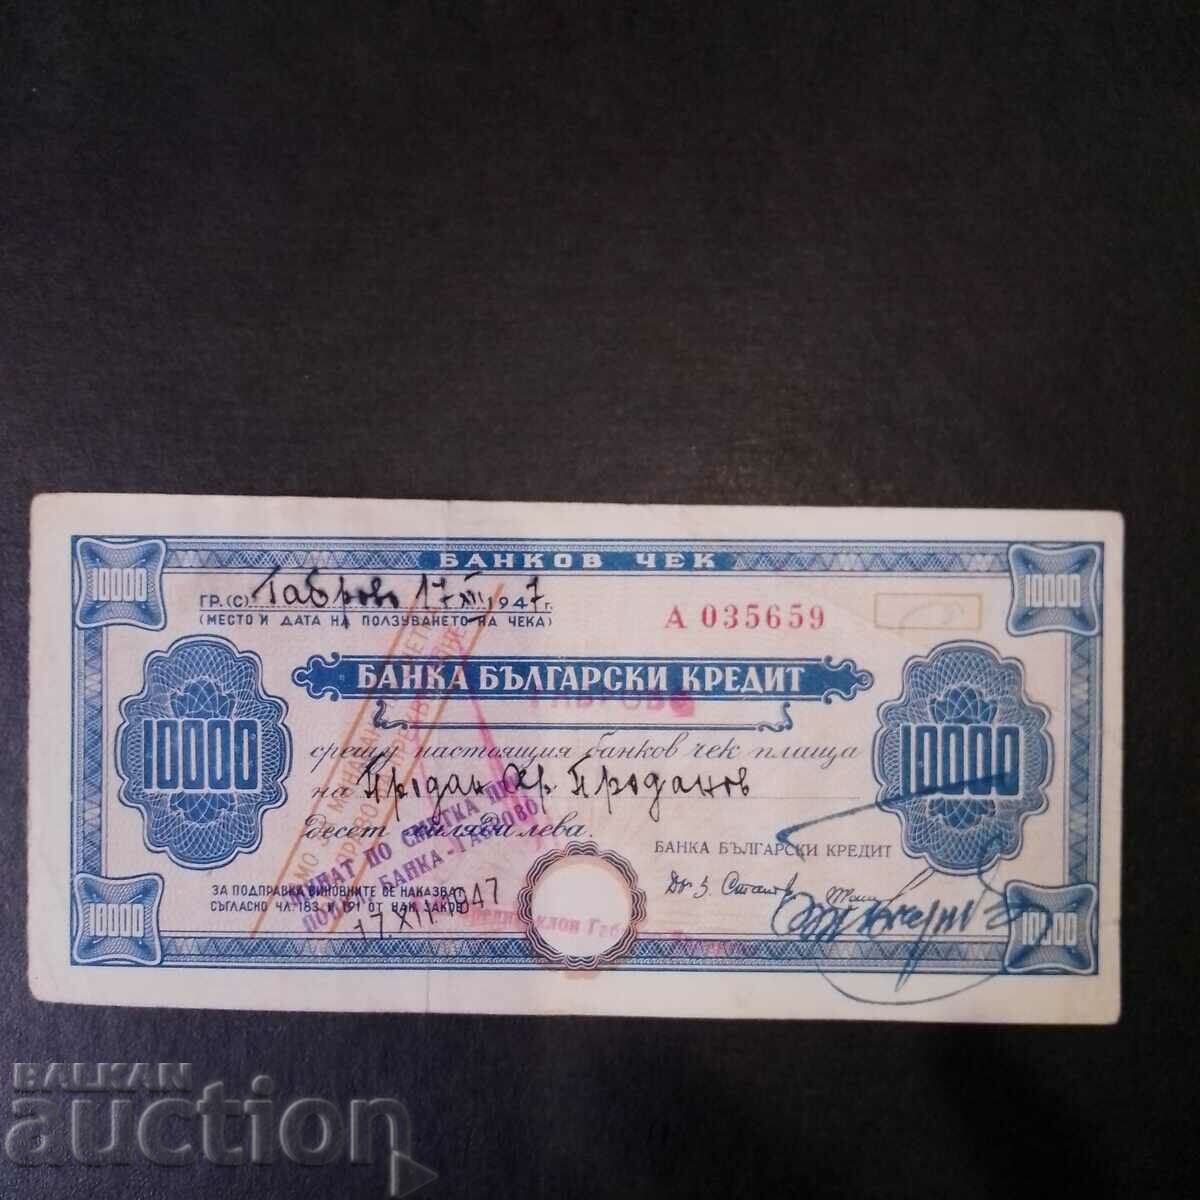 10.000 BGN ΕΠΙΤΑΓΗ-1947 BULGARIA CREDIT BANK.